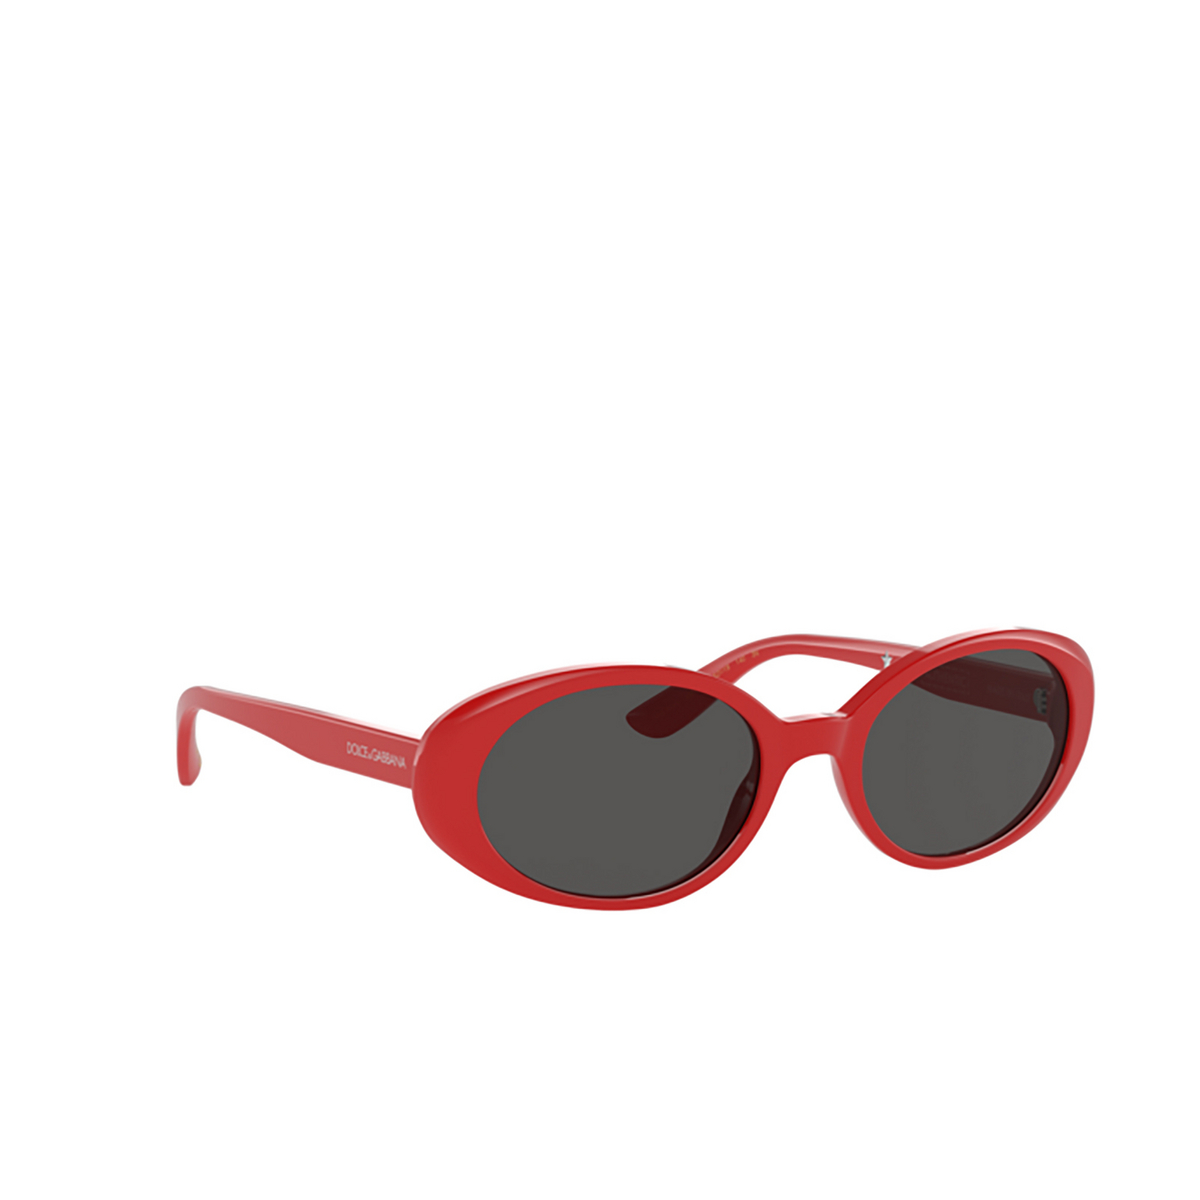 Dolce & Gabbana DG4443 Sunglasses 308887 Red - three-quarters view